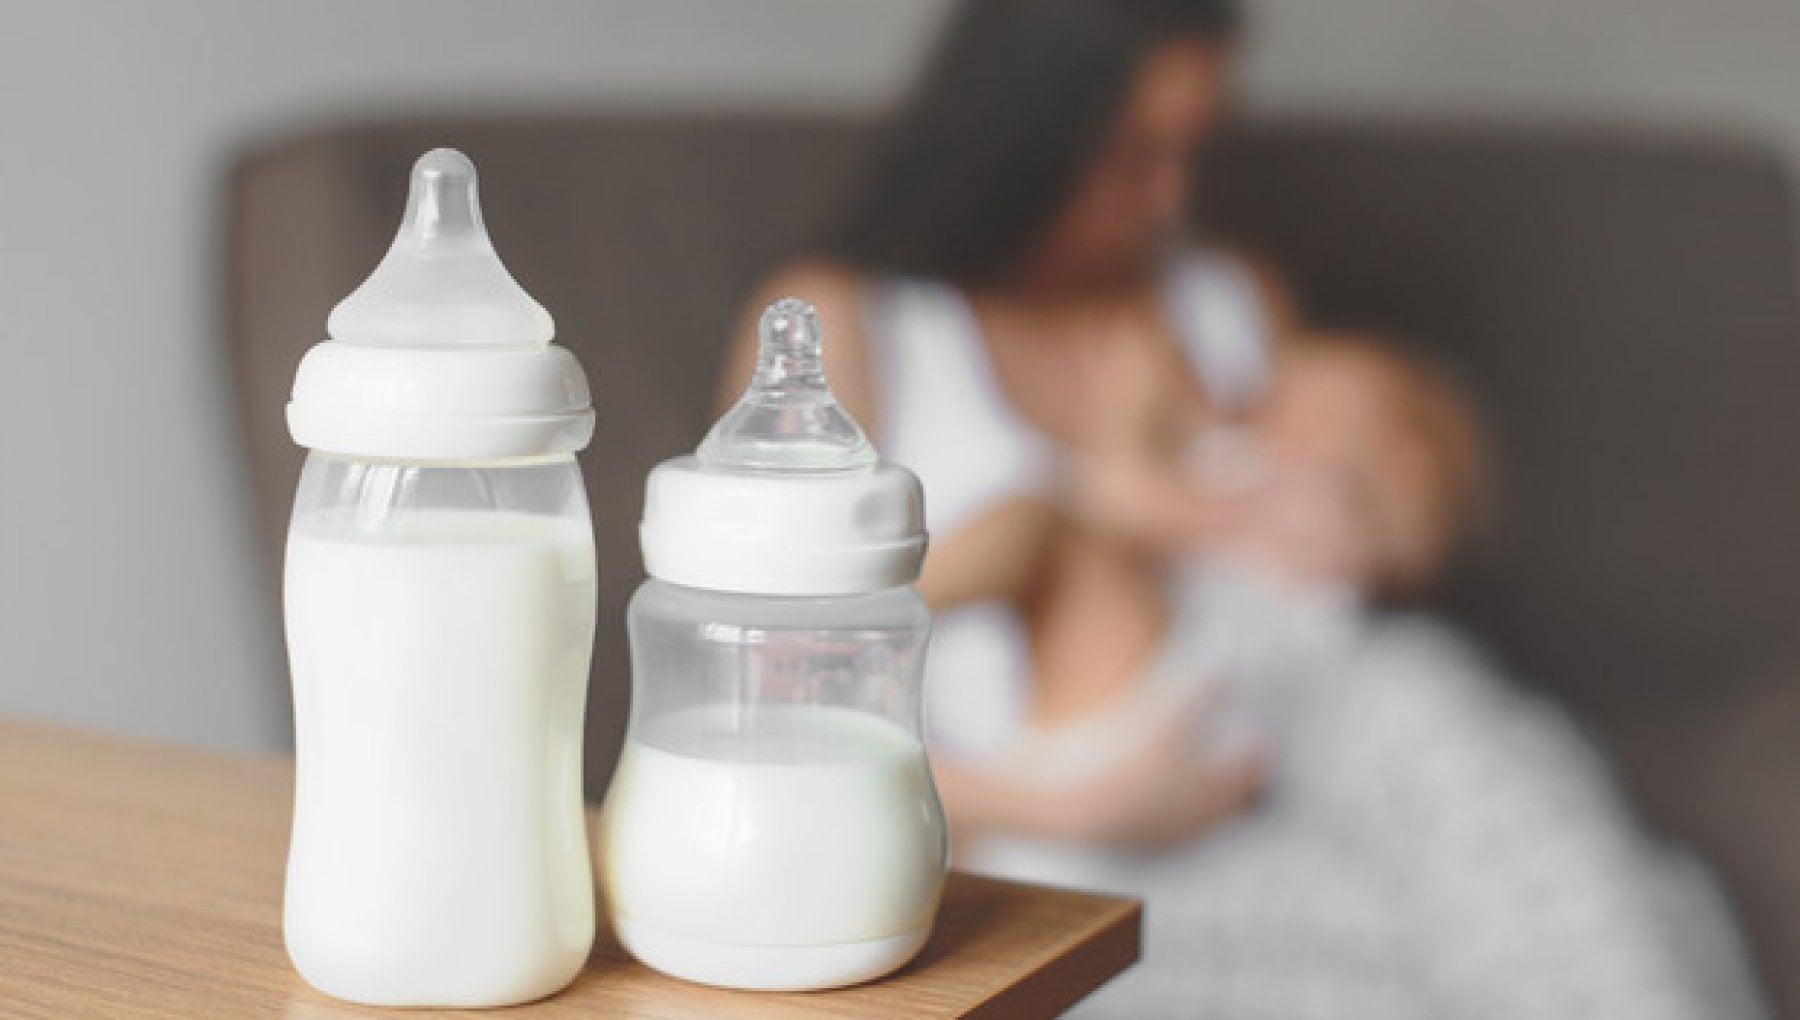 Capri, bambina di 15 mesi beve del latte scaduto e finisce in ospedale